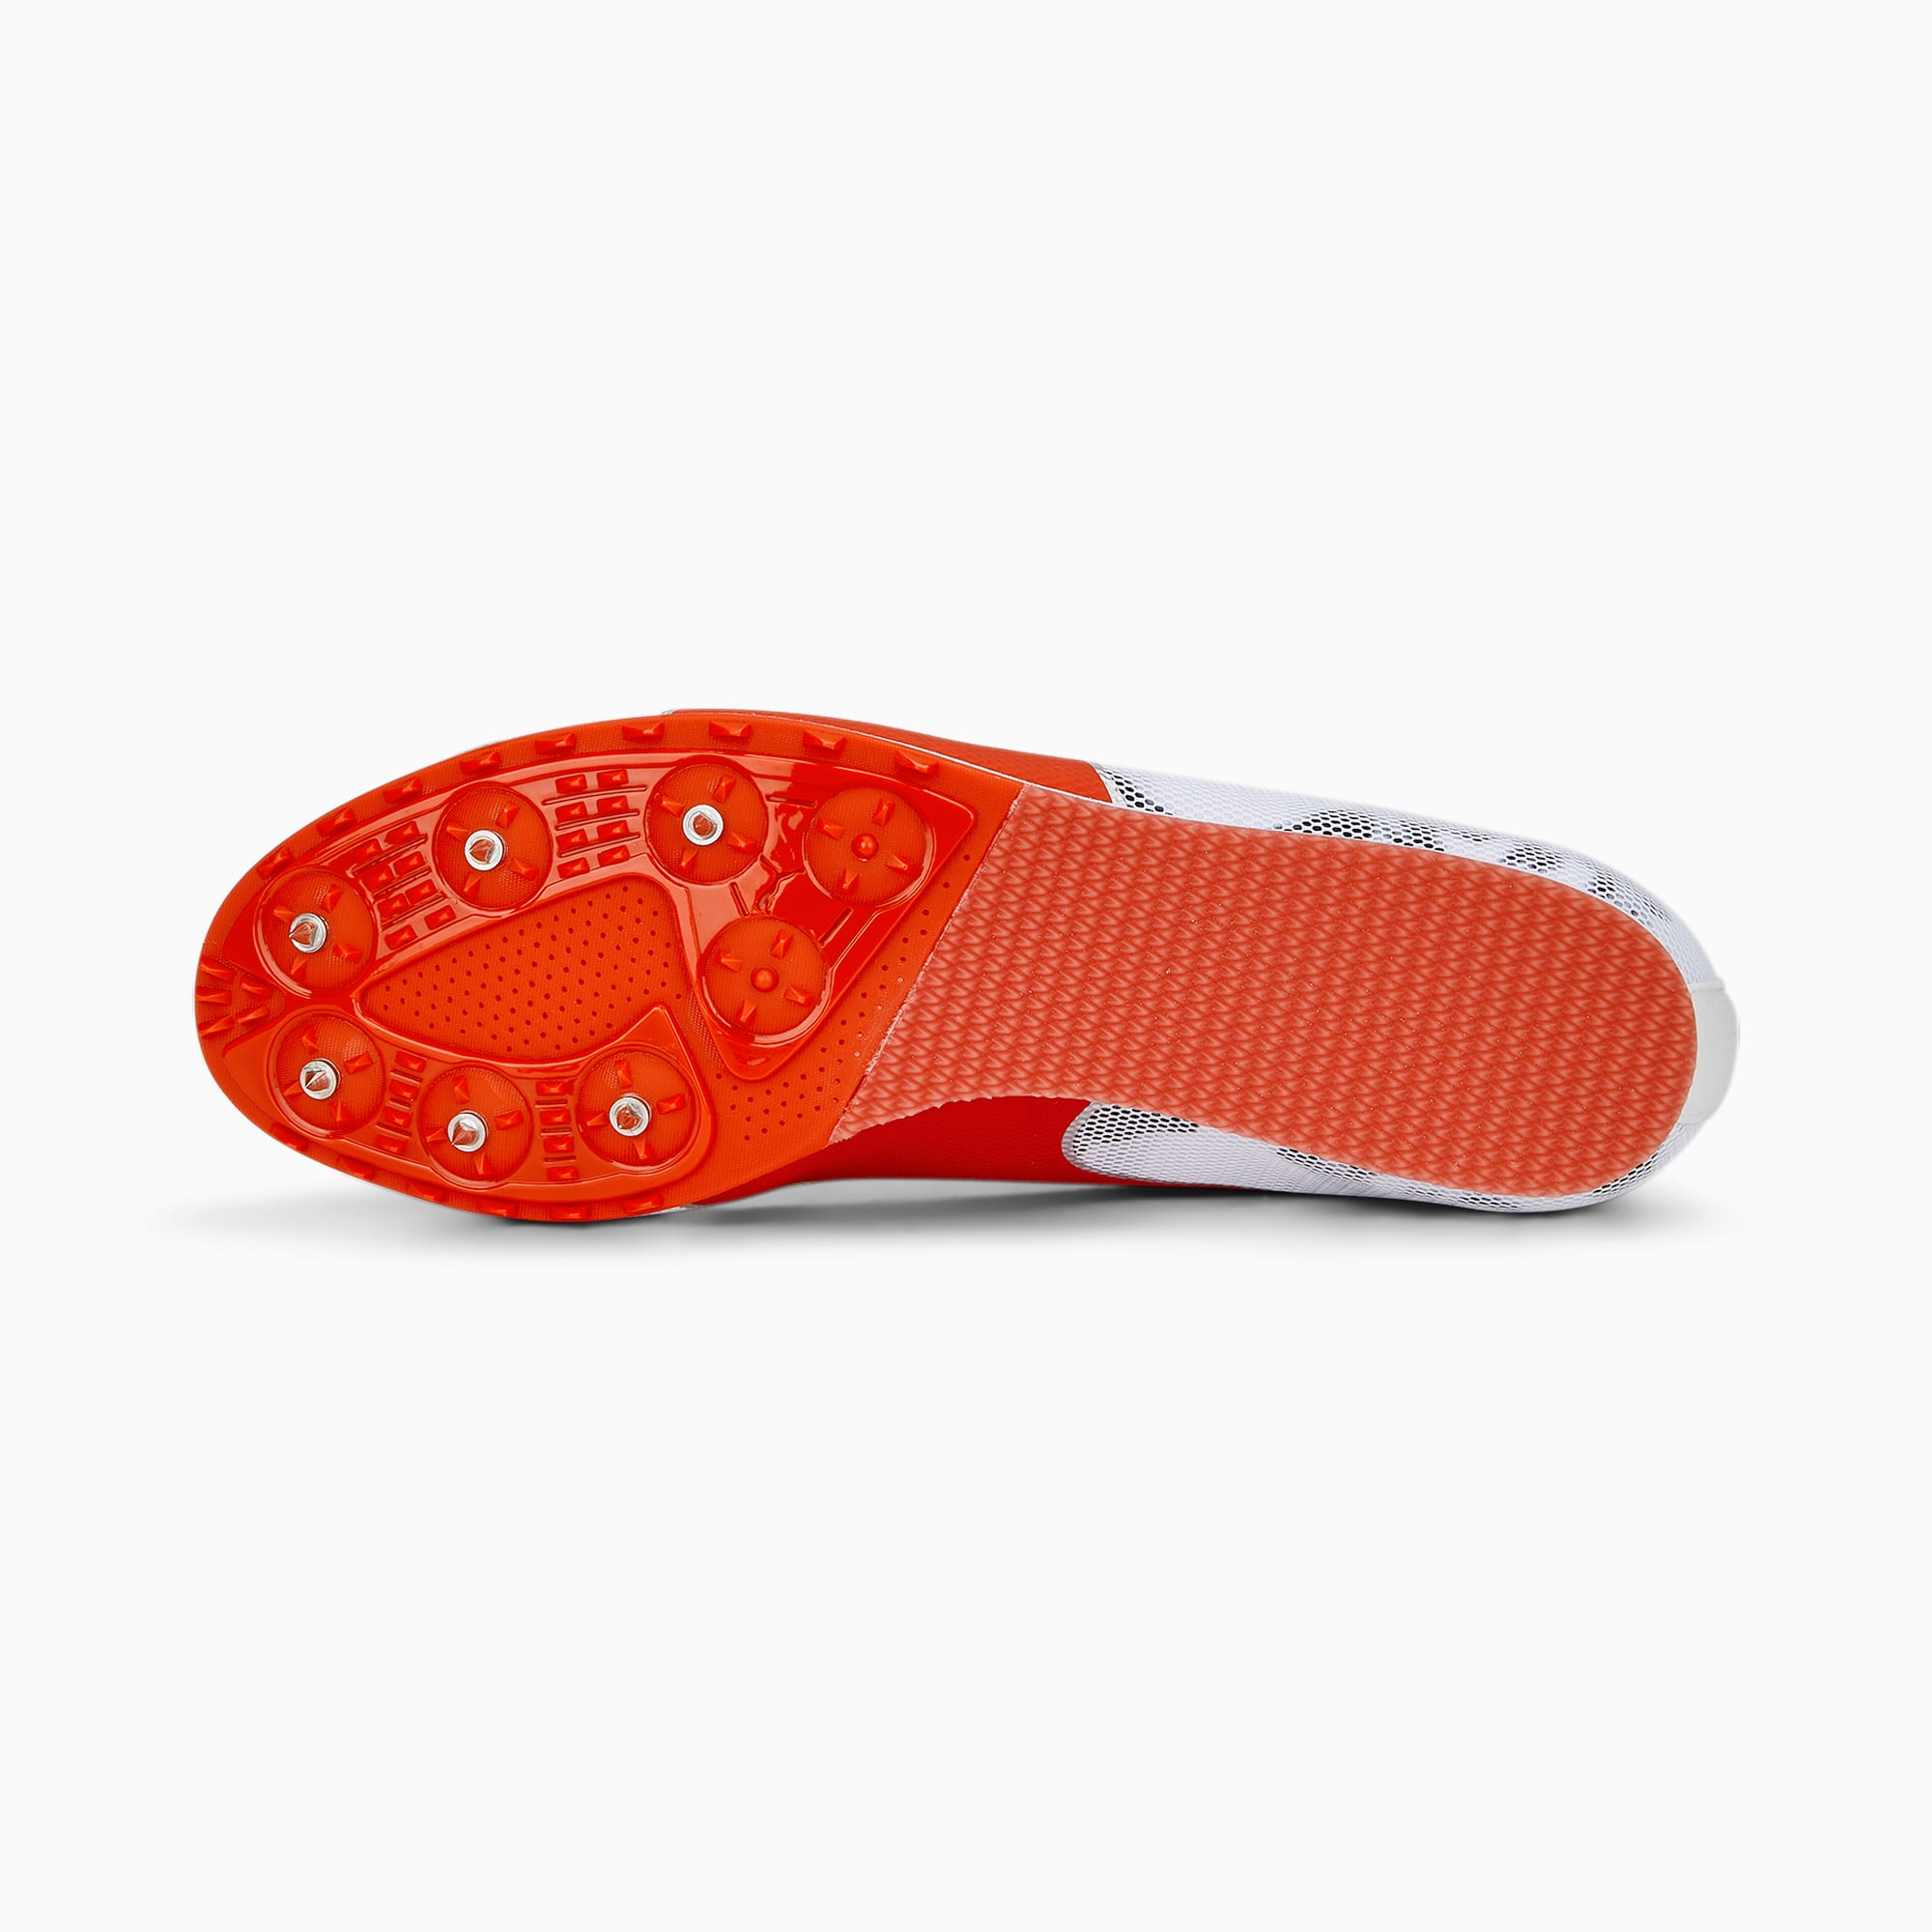 PUMA Chaussures D'athlétisme EvoSPEED Star 8, Noir/Rouge/Blanc